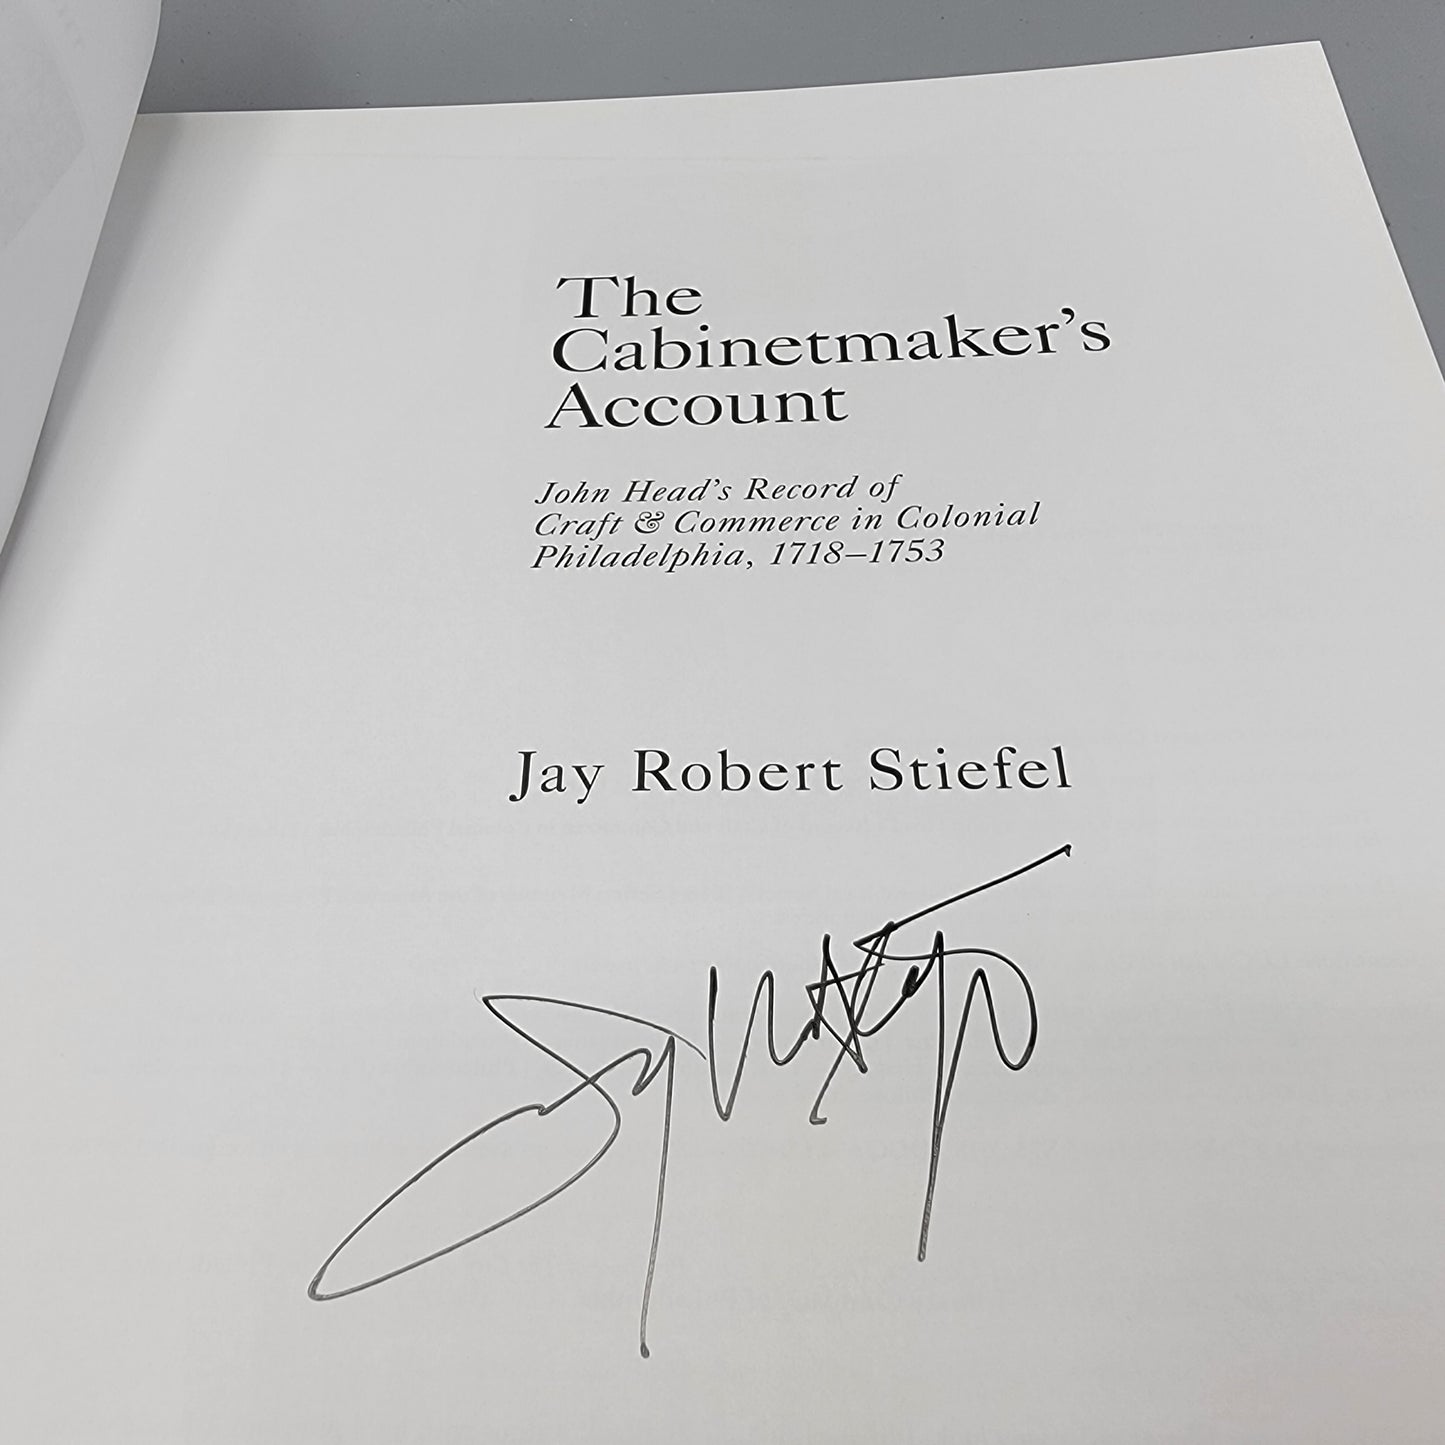 Jay Robert Stiefel "The Cabinetmaker's Account"